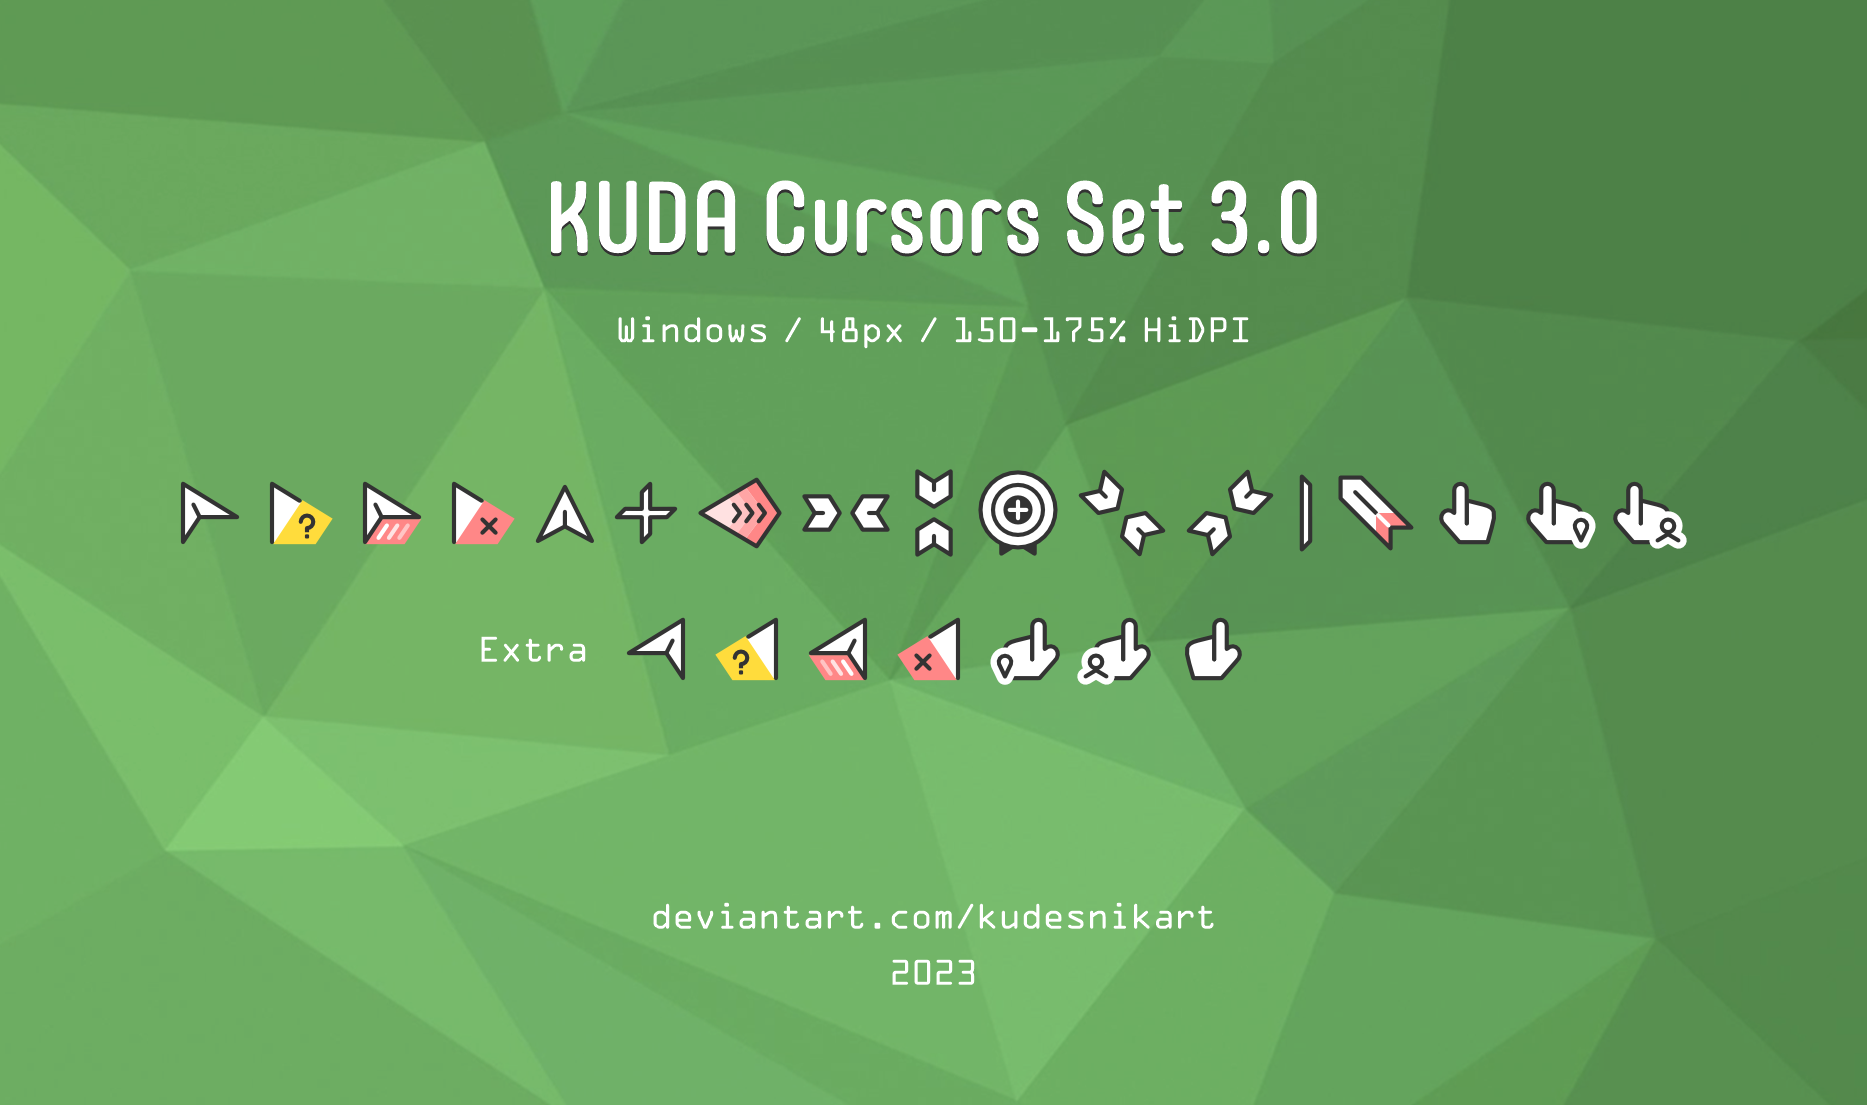 Windows 11 Cursors Concept HD v2 by jepriCreations on DeviantArt